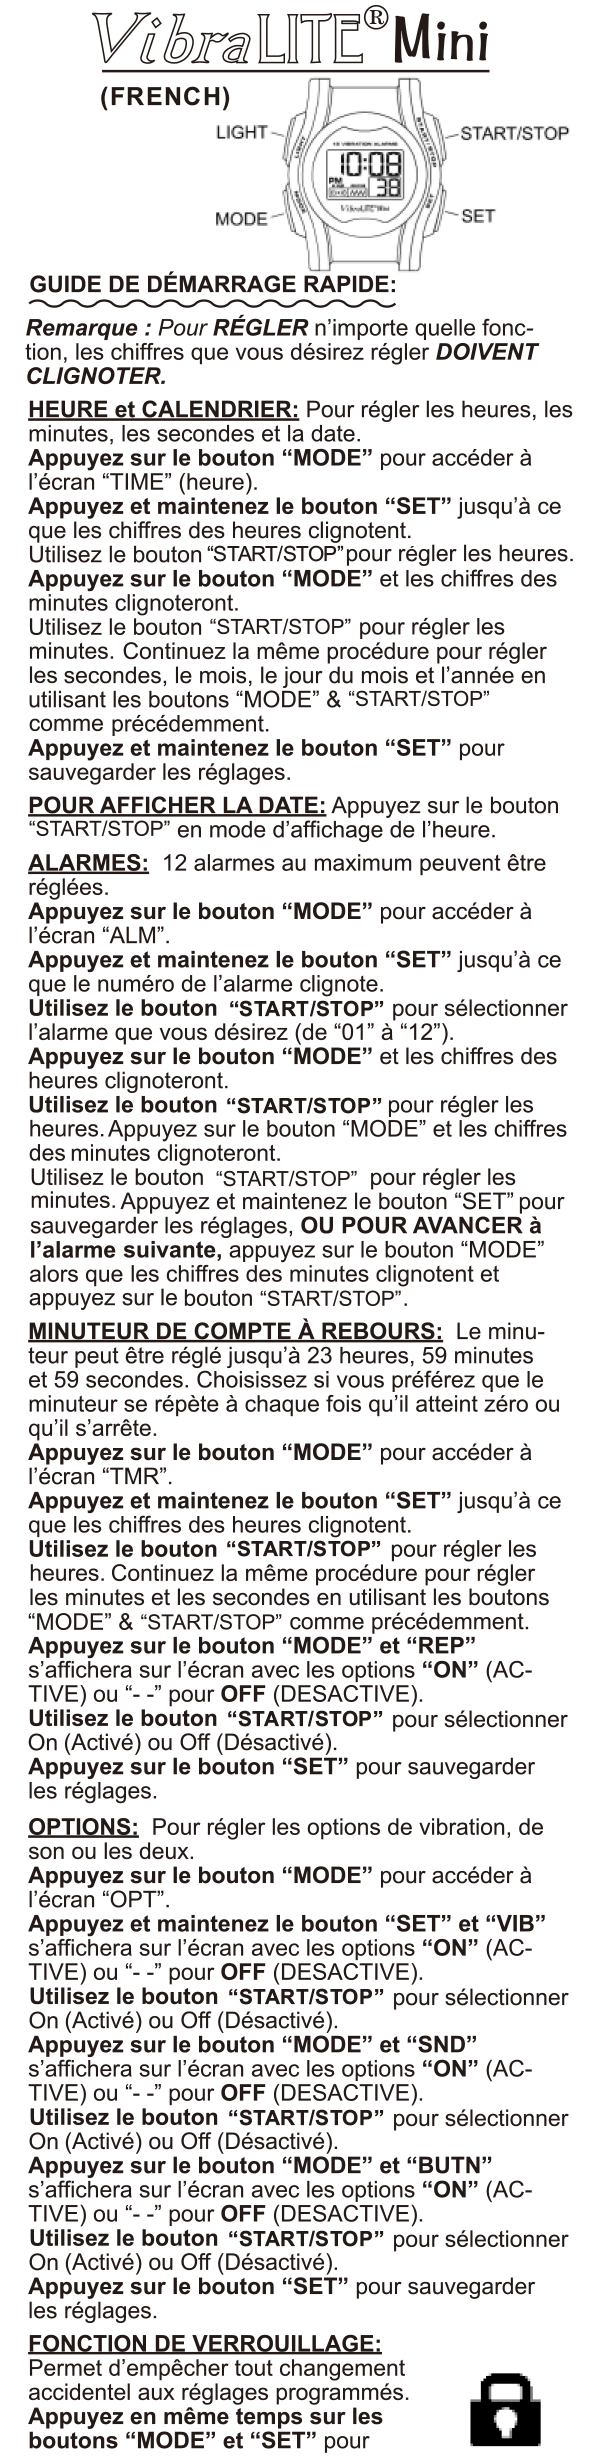 vibralite-mini-french-instruction-manual-page-1